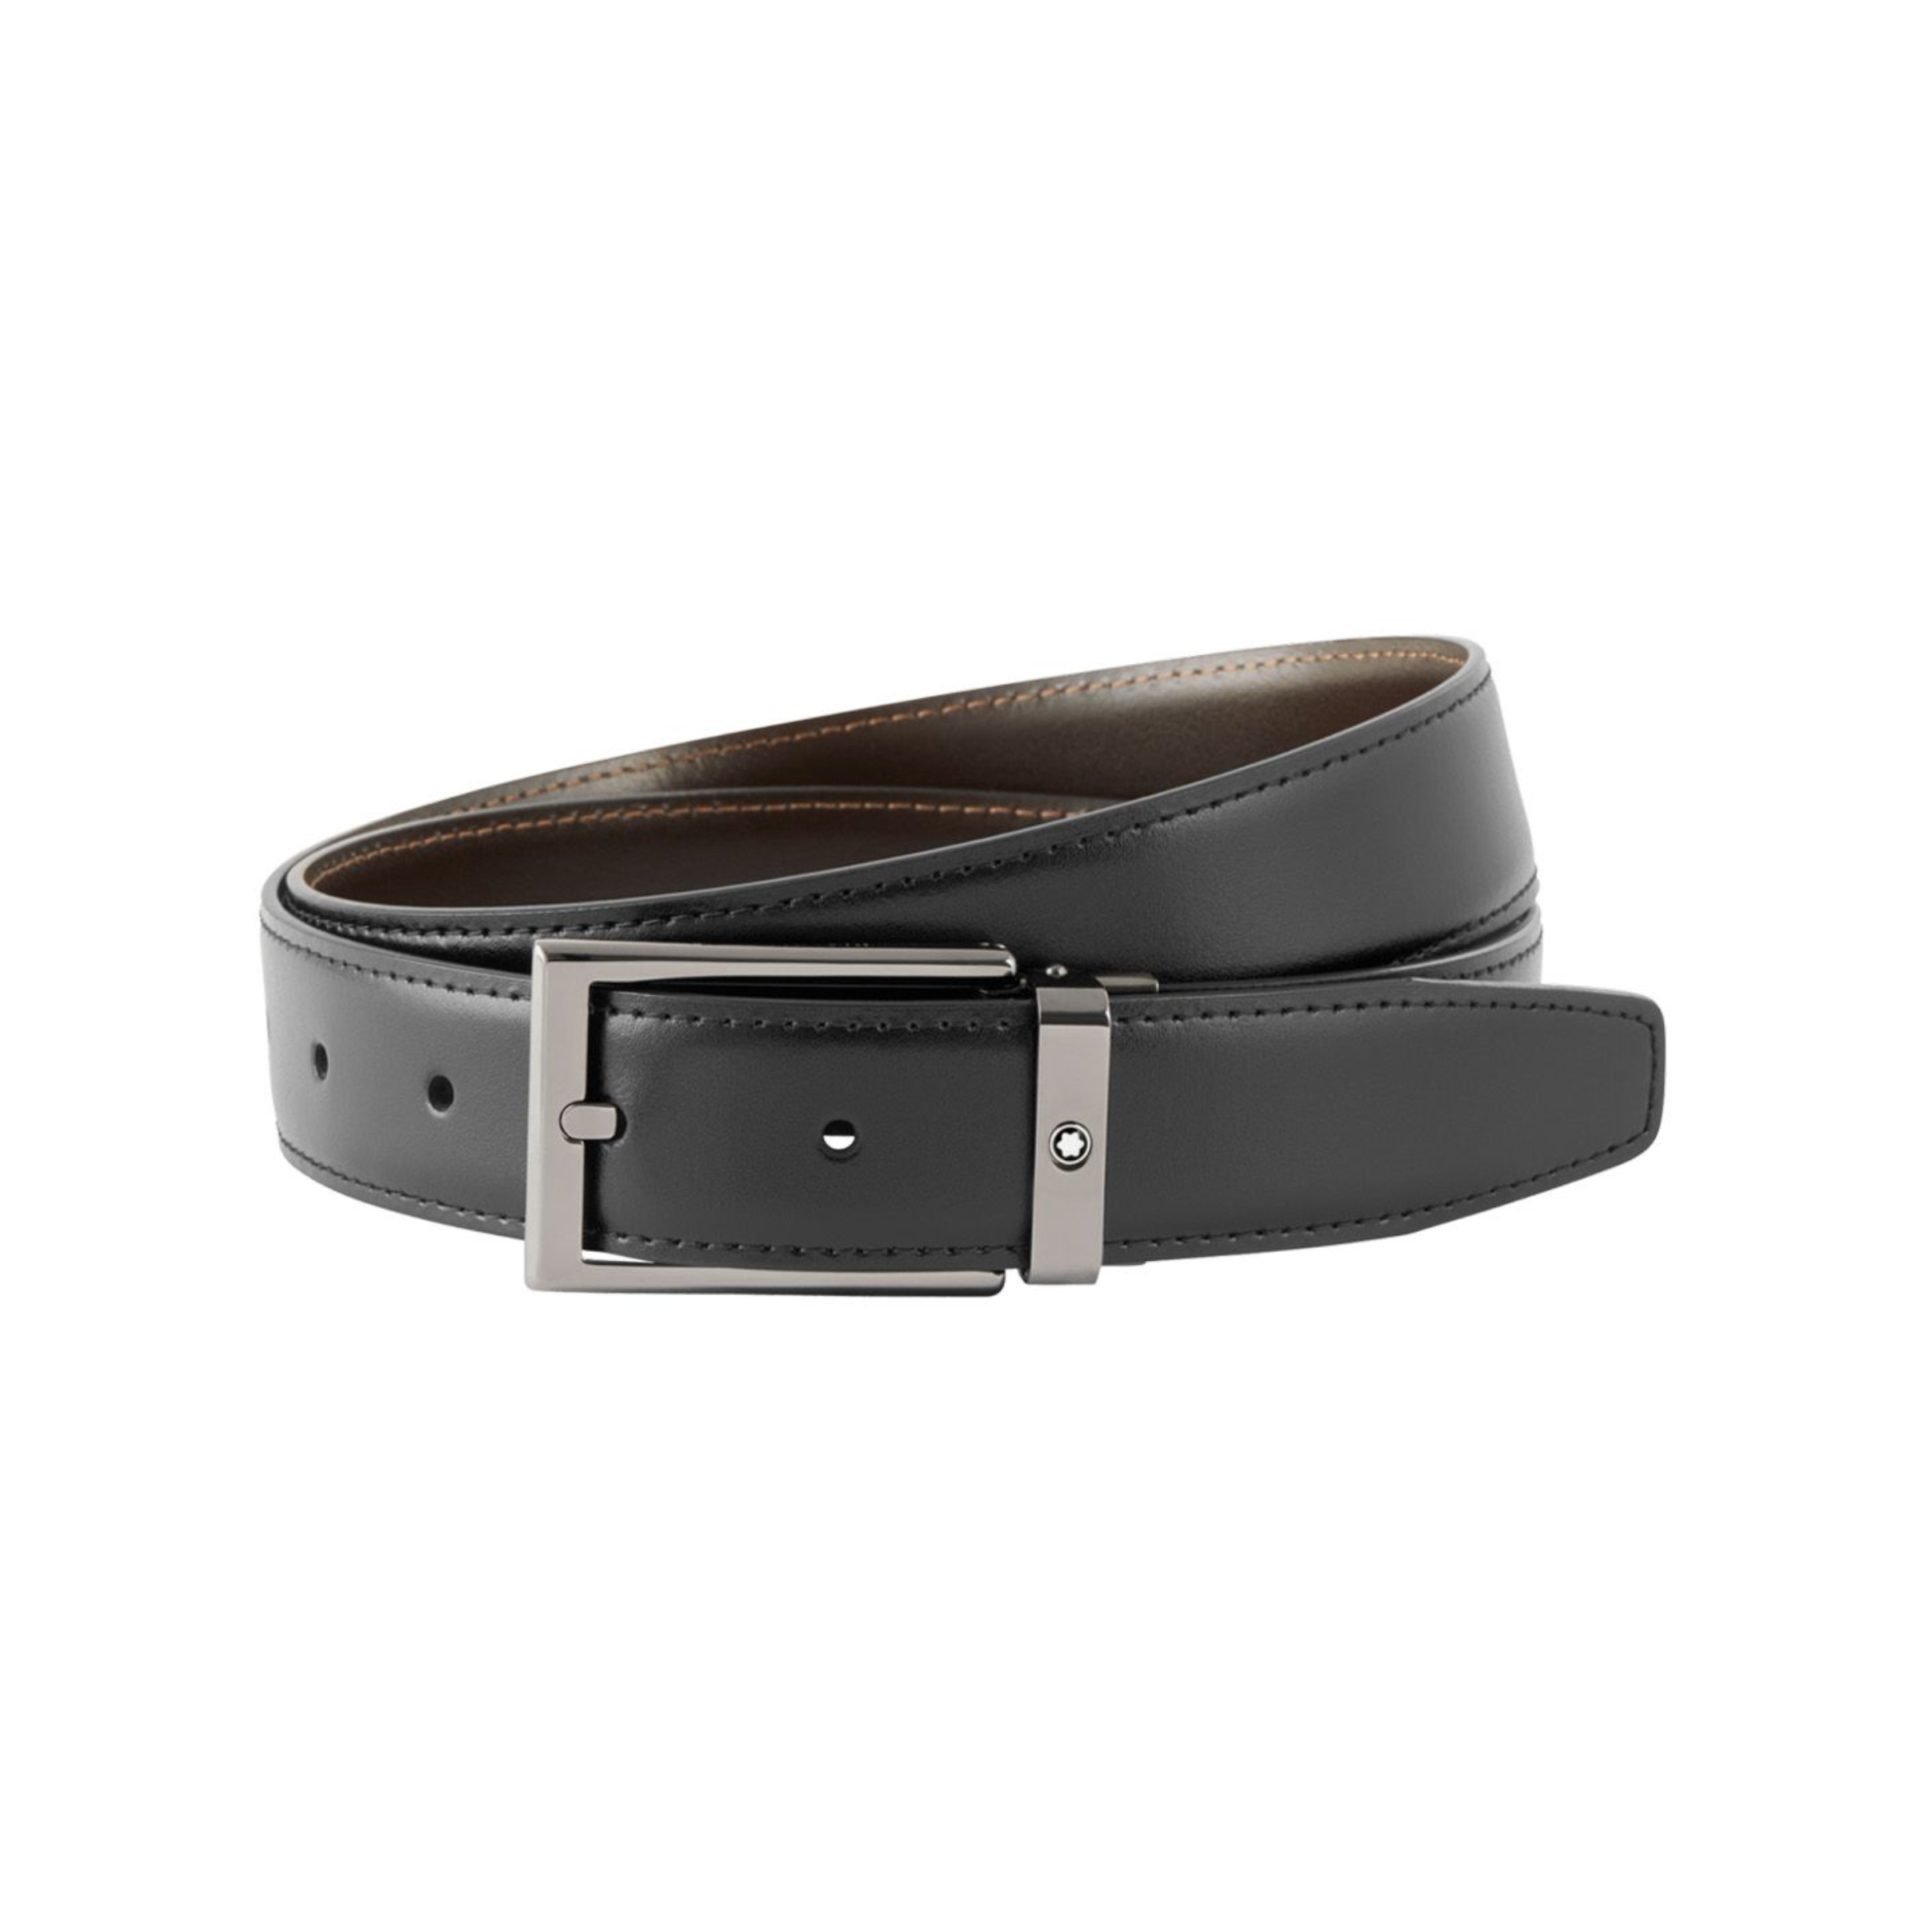 Buy Montblanc Belt | Leather Strap - Black/Brown